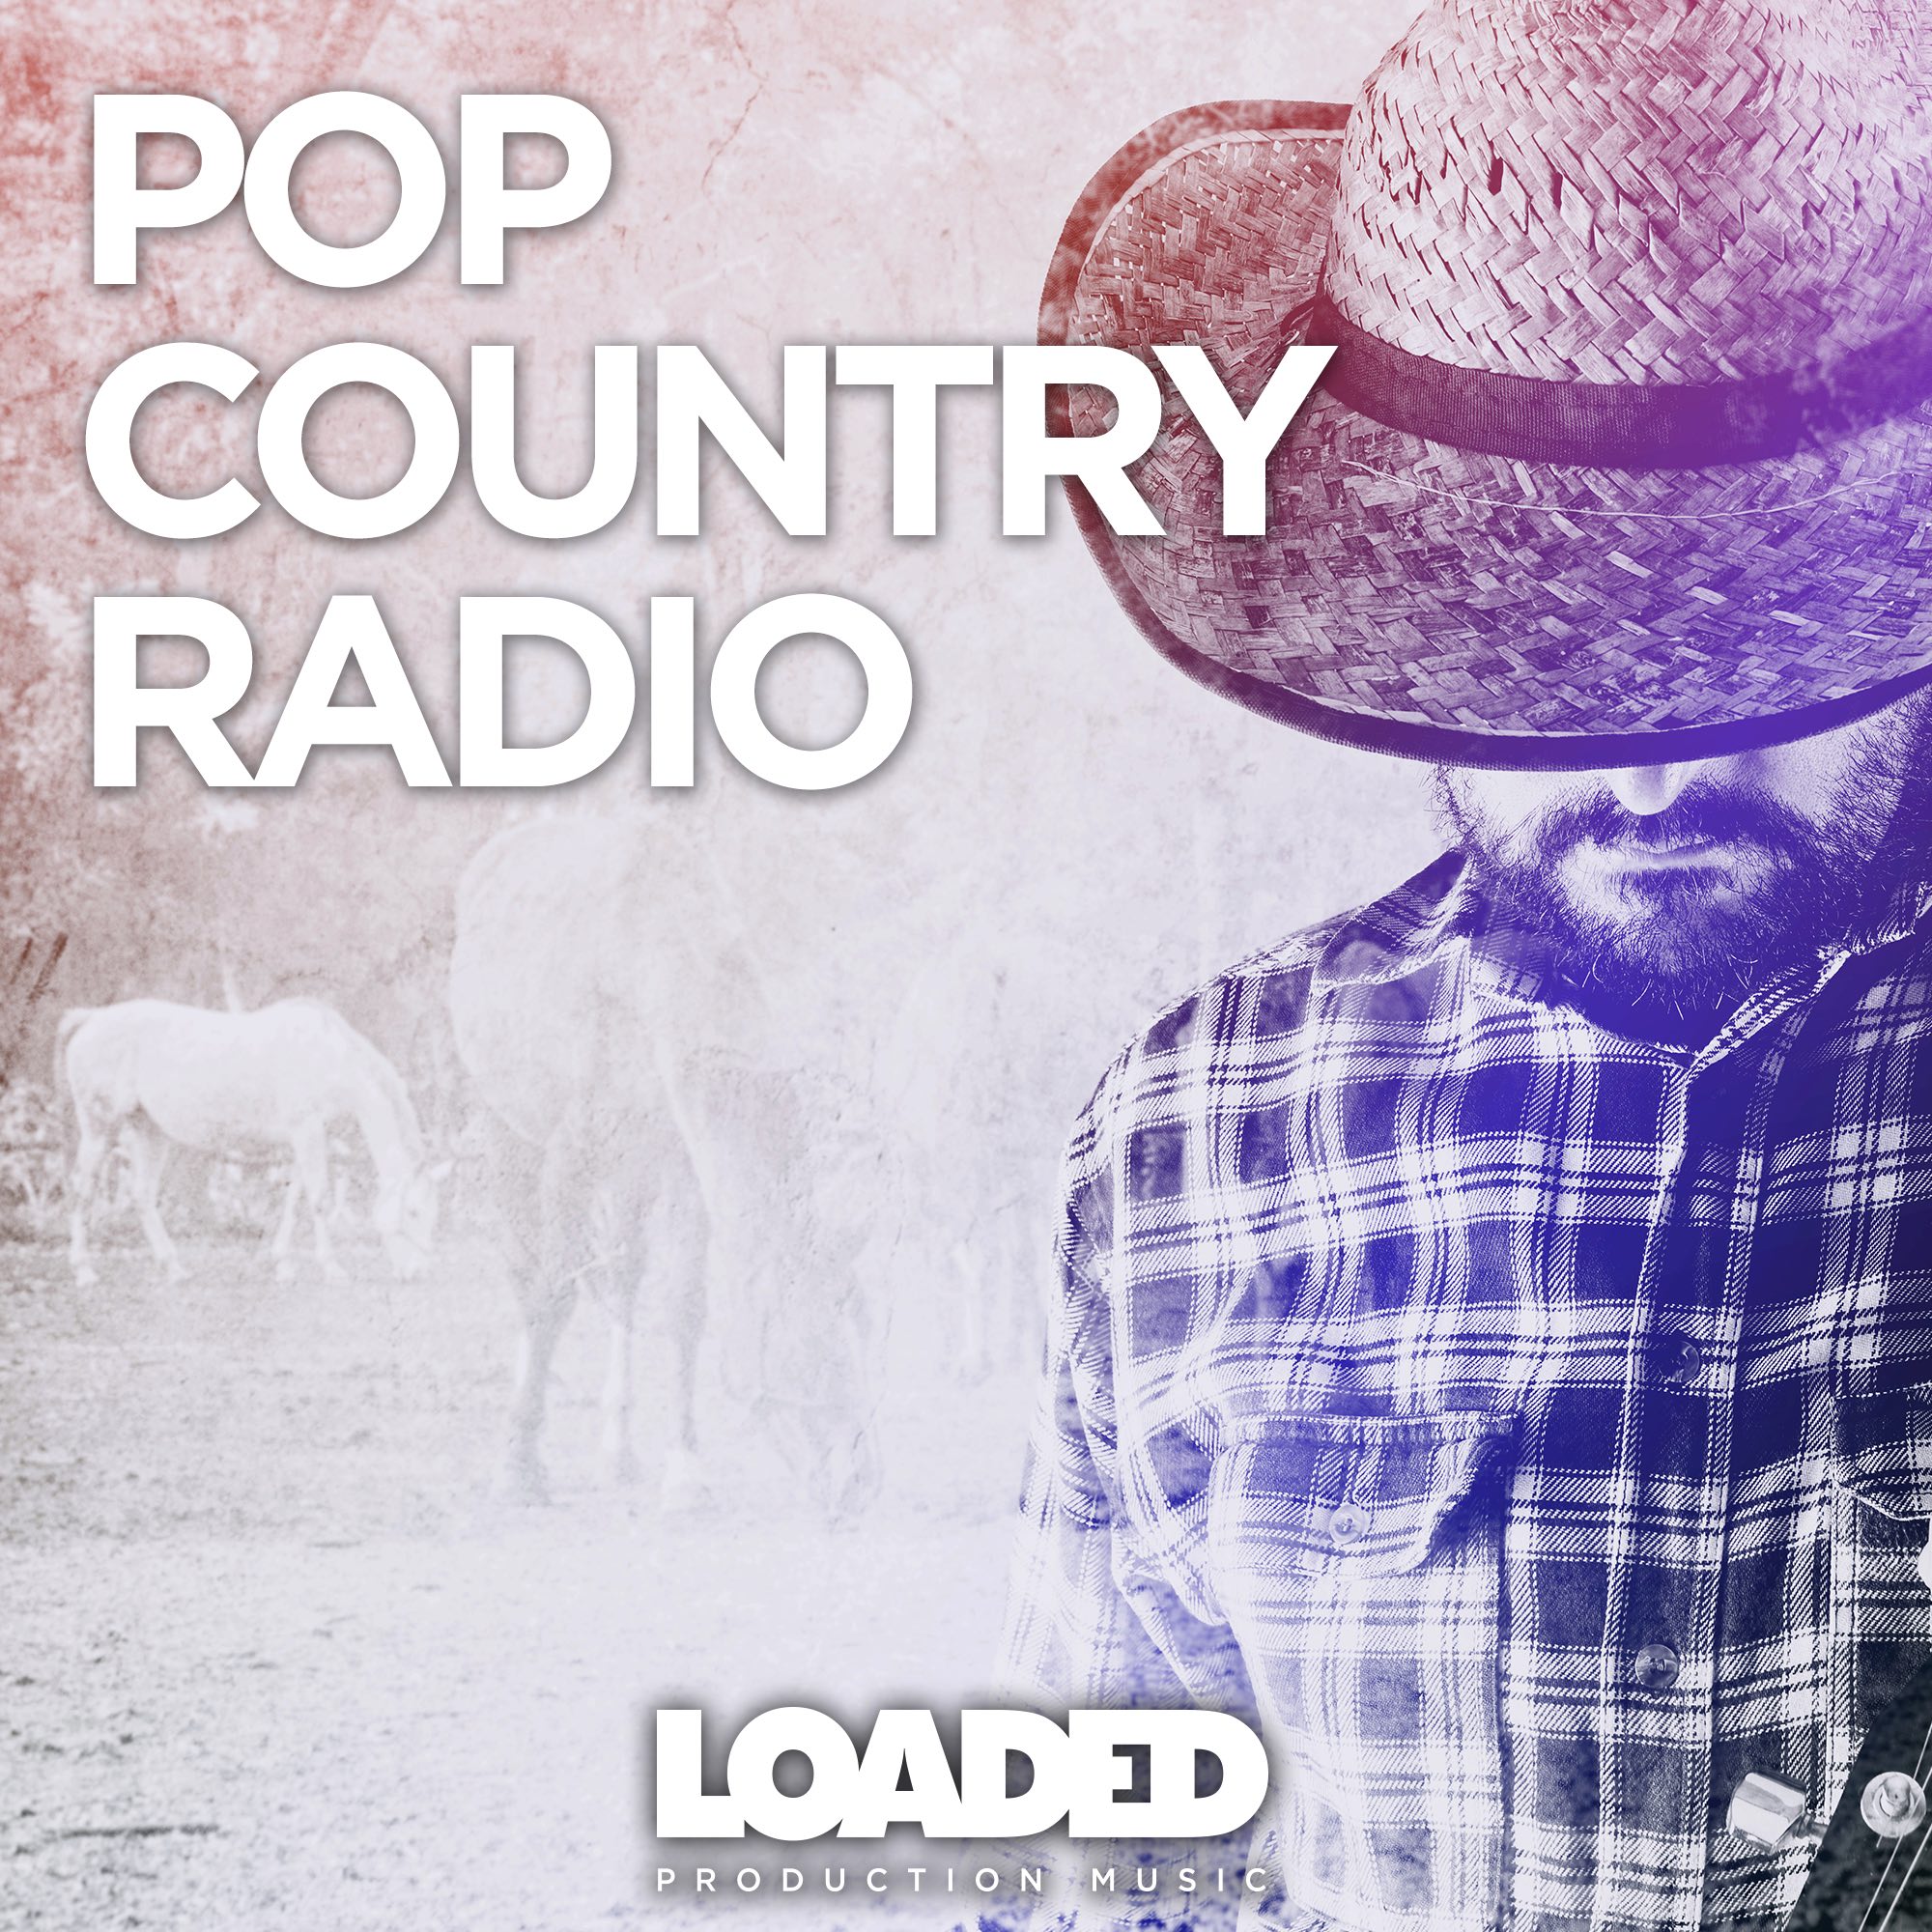 LPM 062 - Pop Country Radio - Album Cover